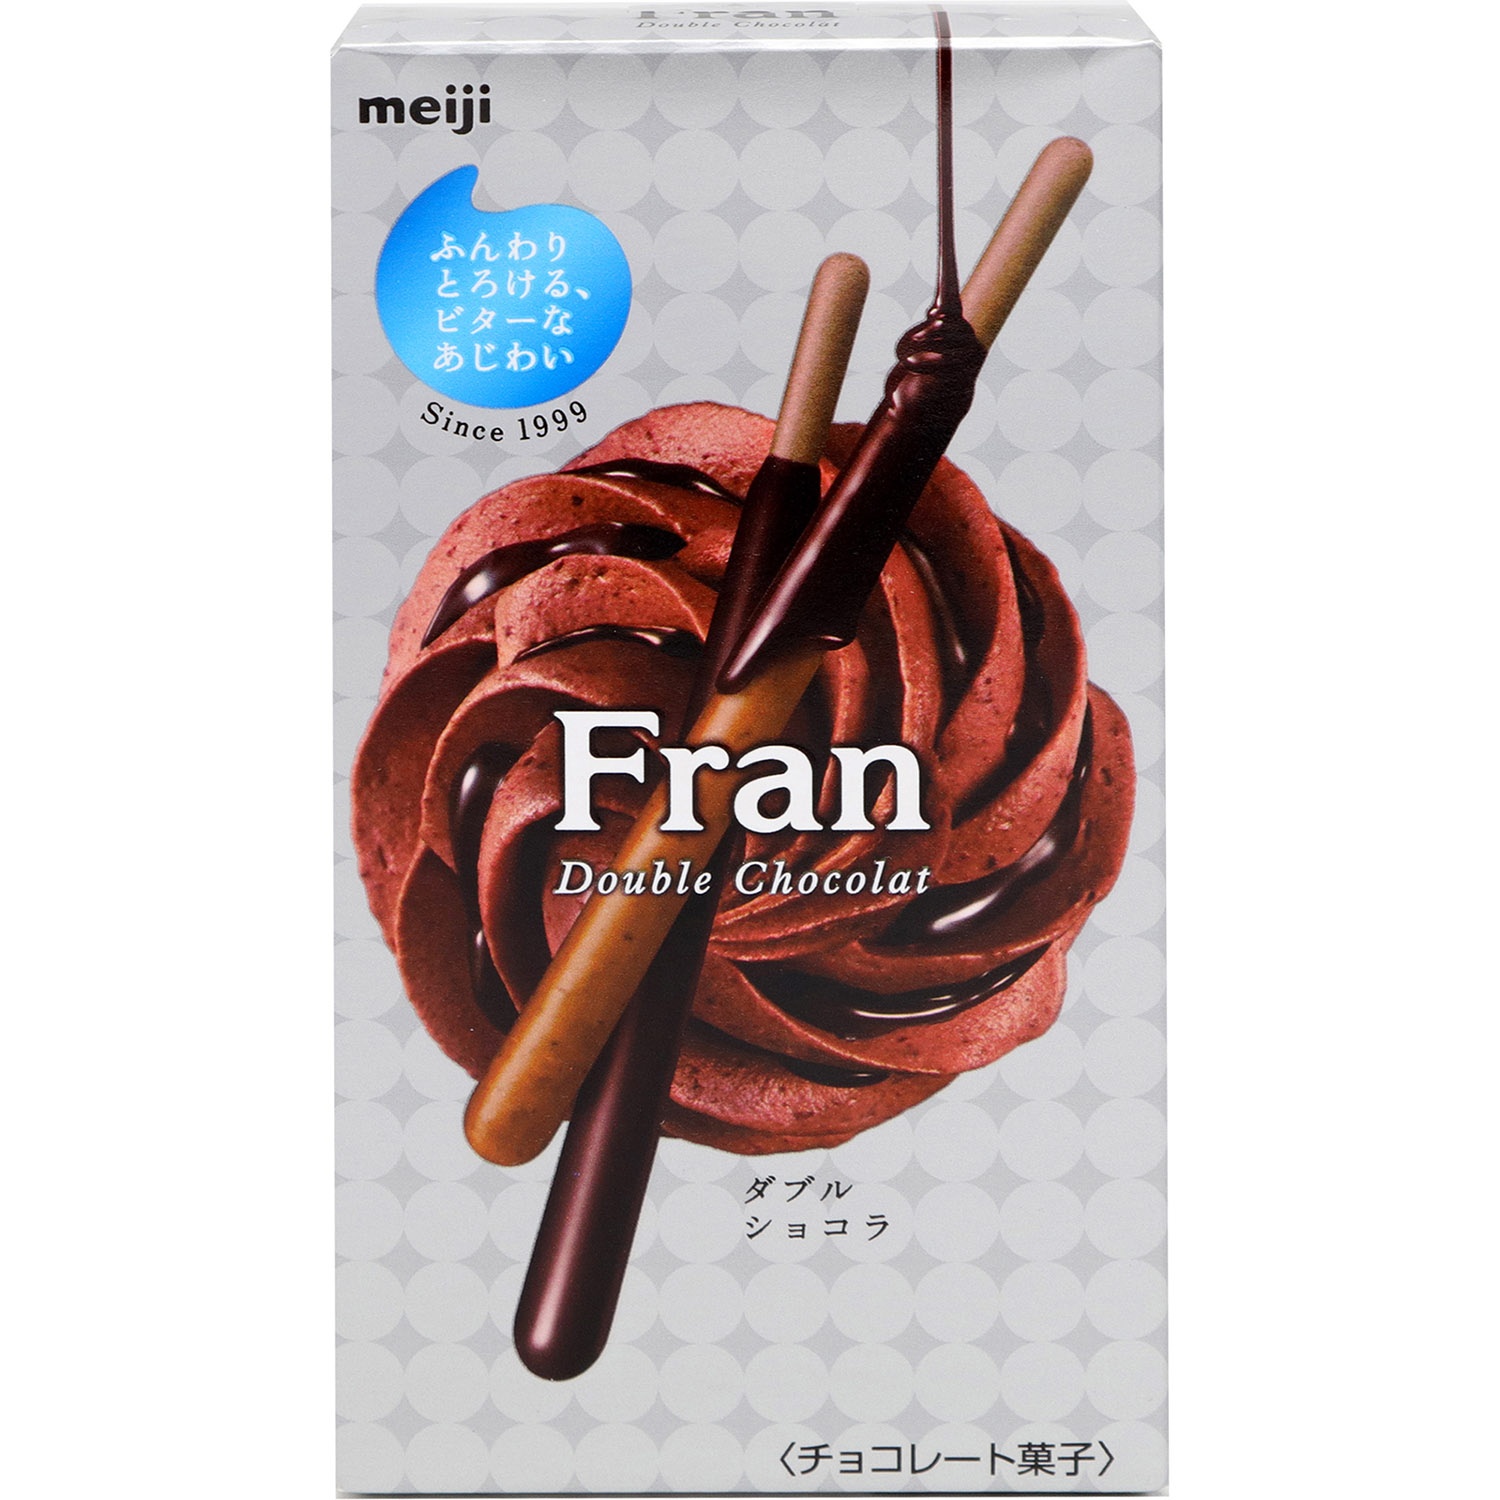 slide 1 of 1, Meiji Fran Double Chocolate, 1.44 oz